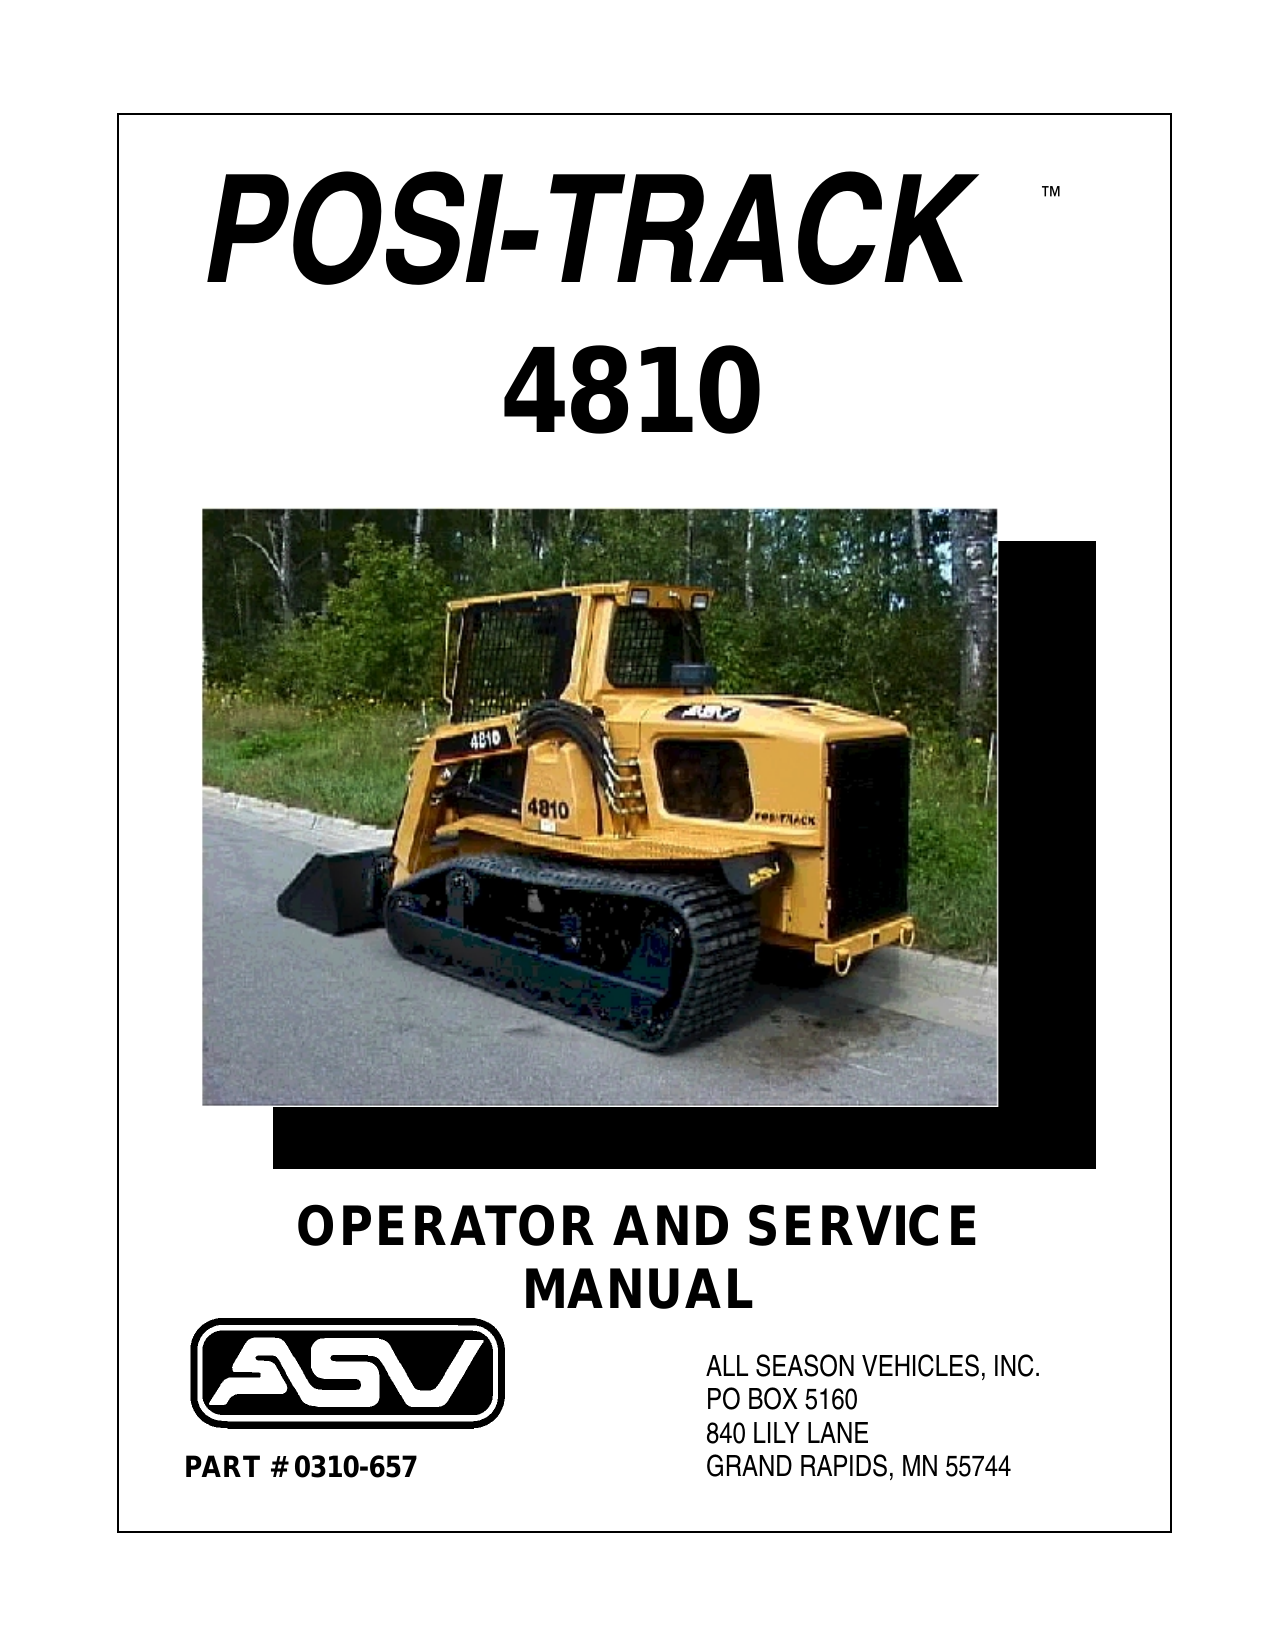 ASV 4810 Posi-Track Loader operators and service Preview image 2